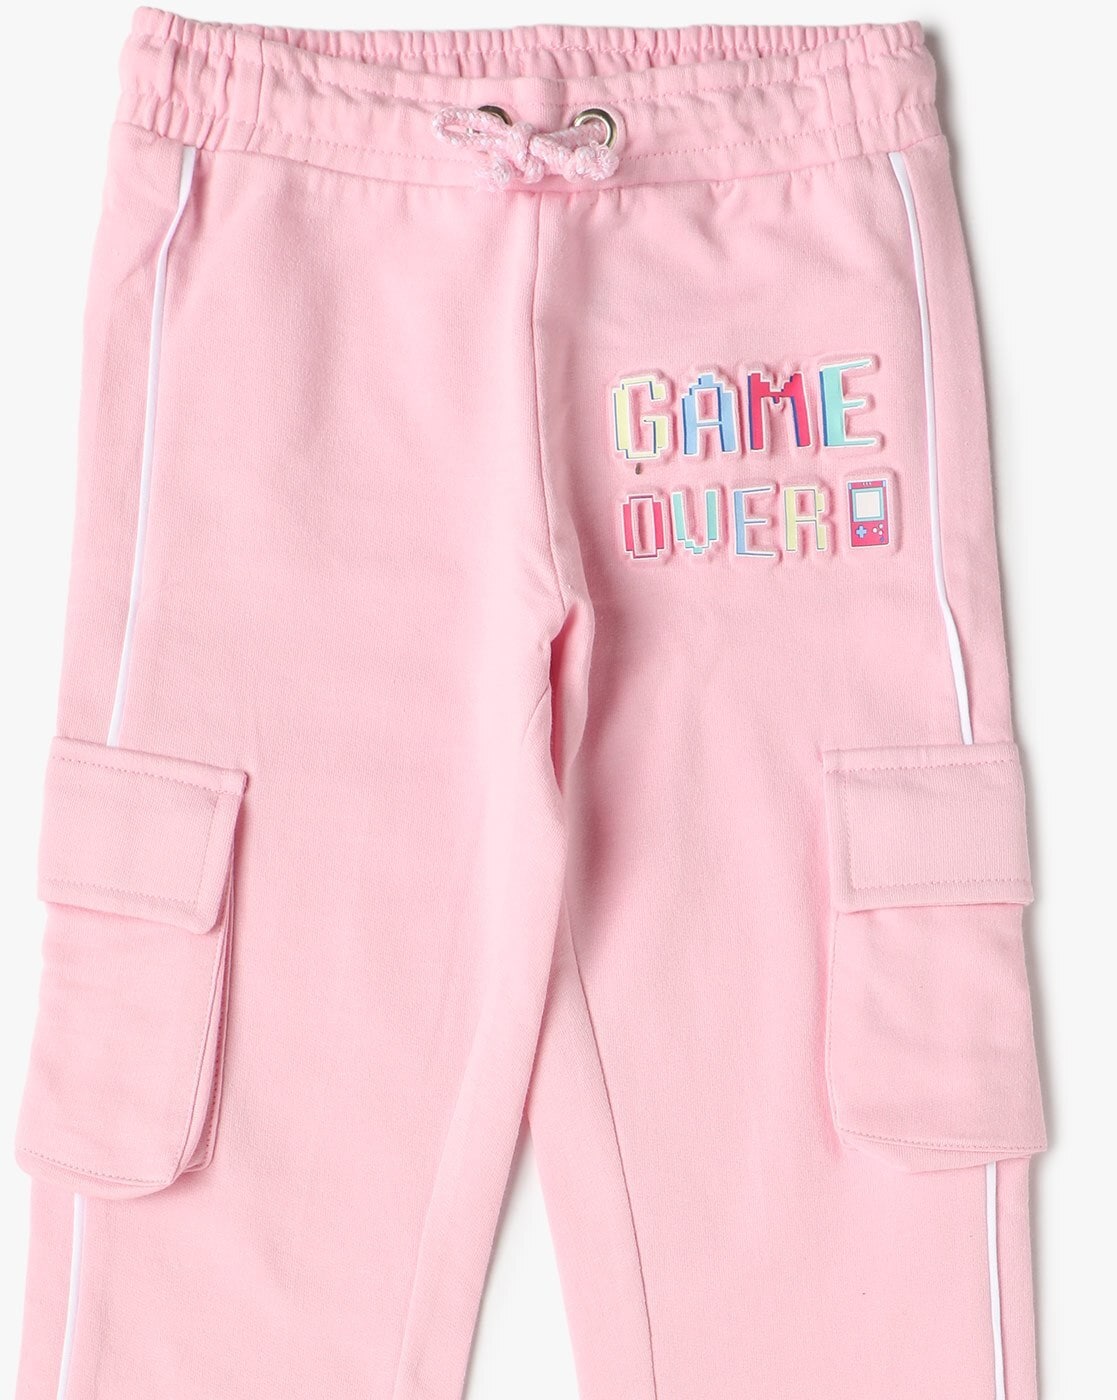 Buy Girls Pink Graphic Print Regular Fit Track Pants Online - 747385